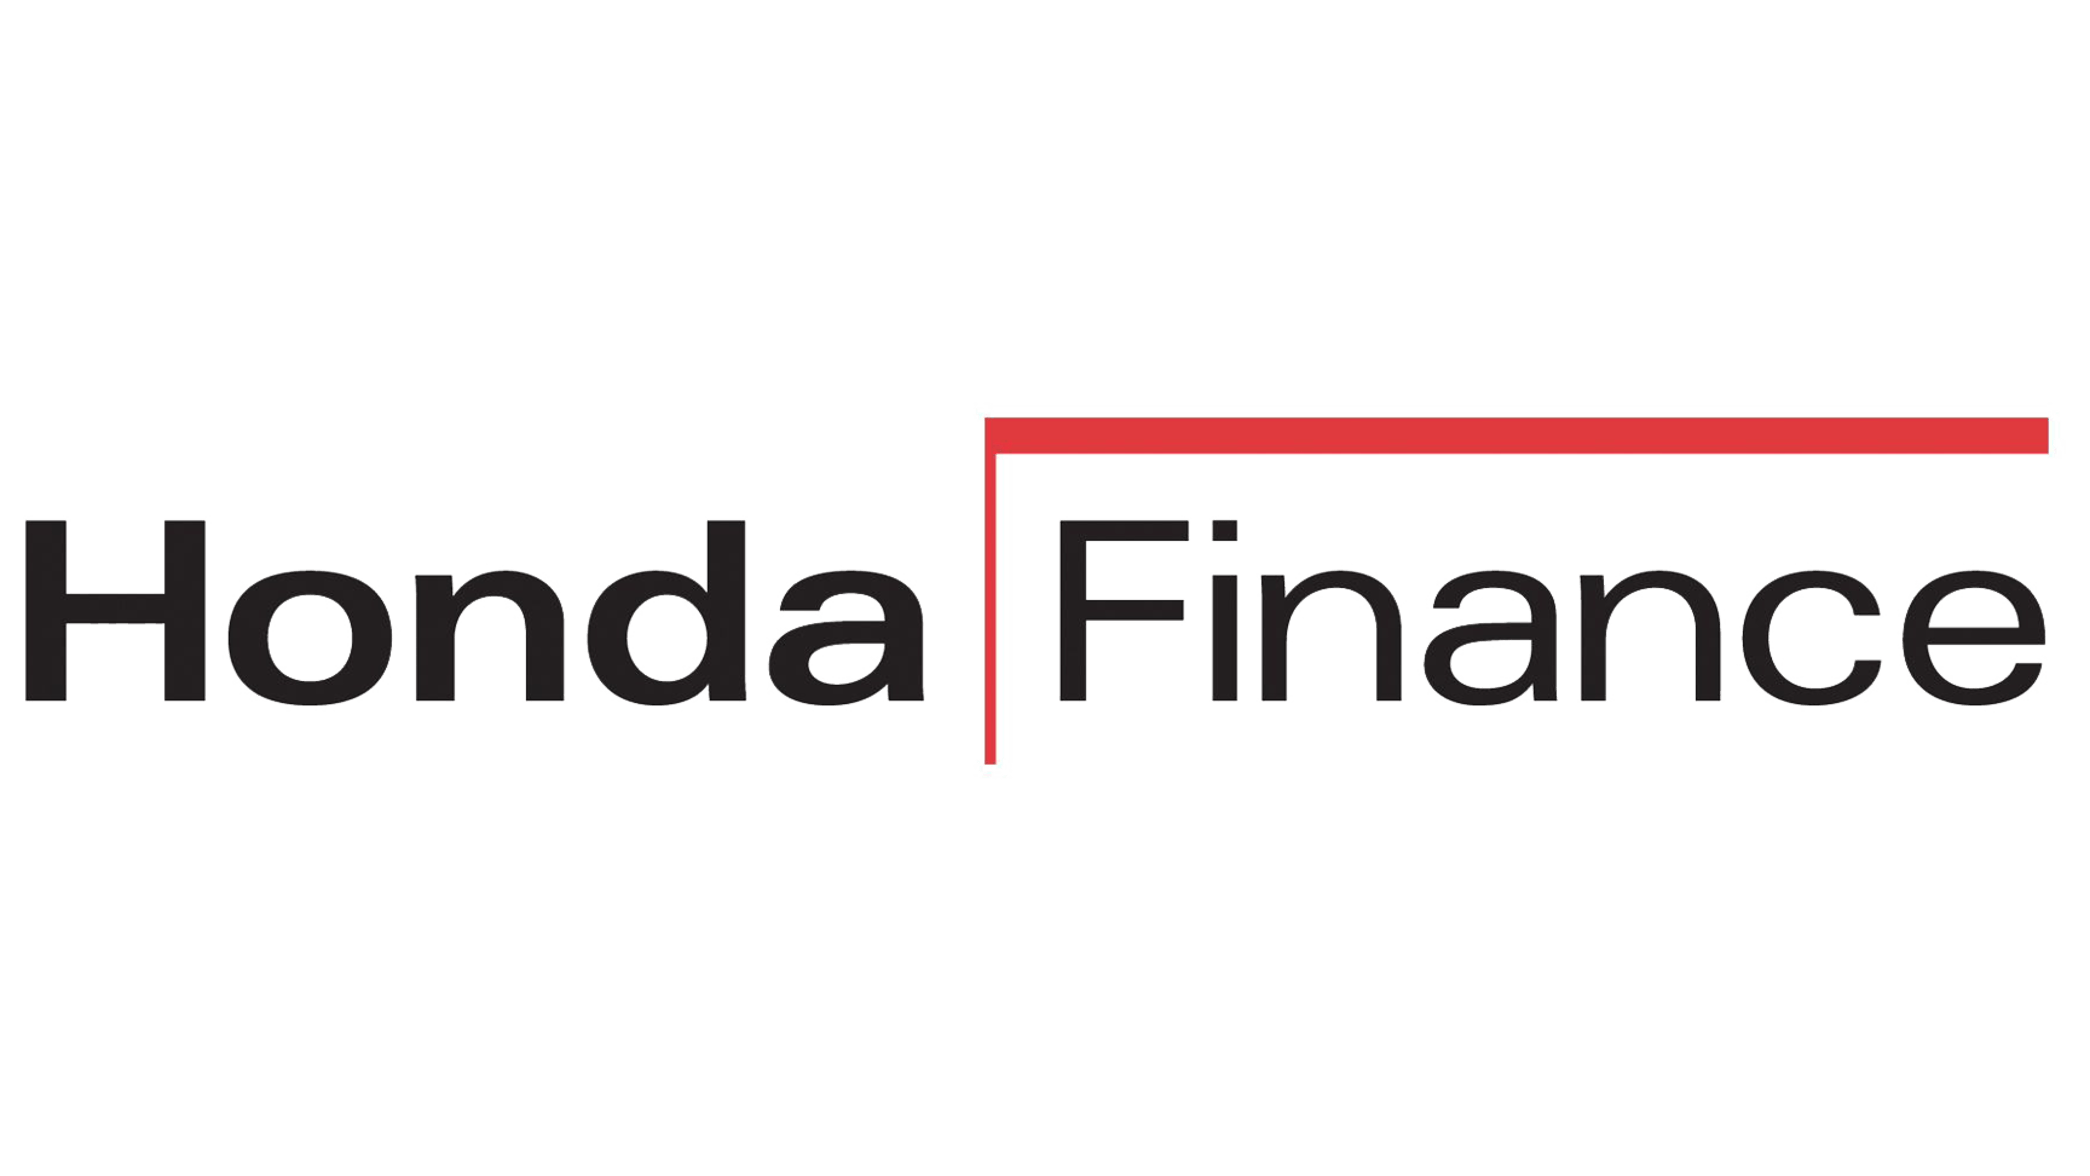 Google Finance Logo - Car Finance & Leasing. Deals & Options